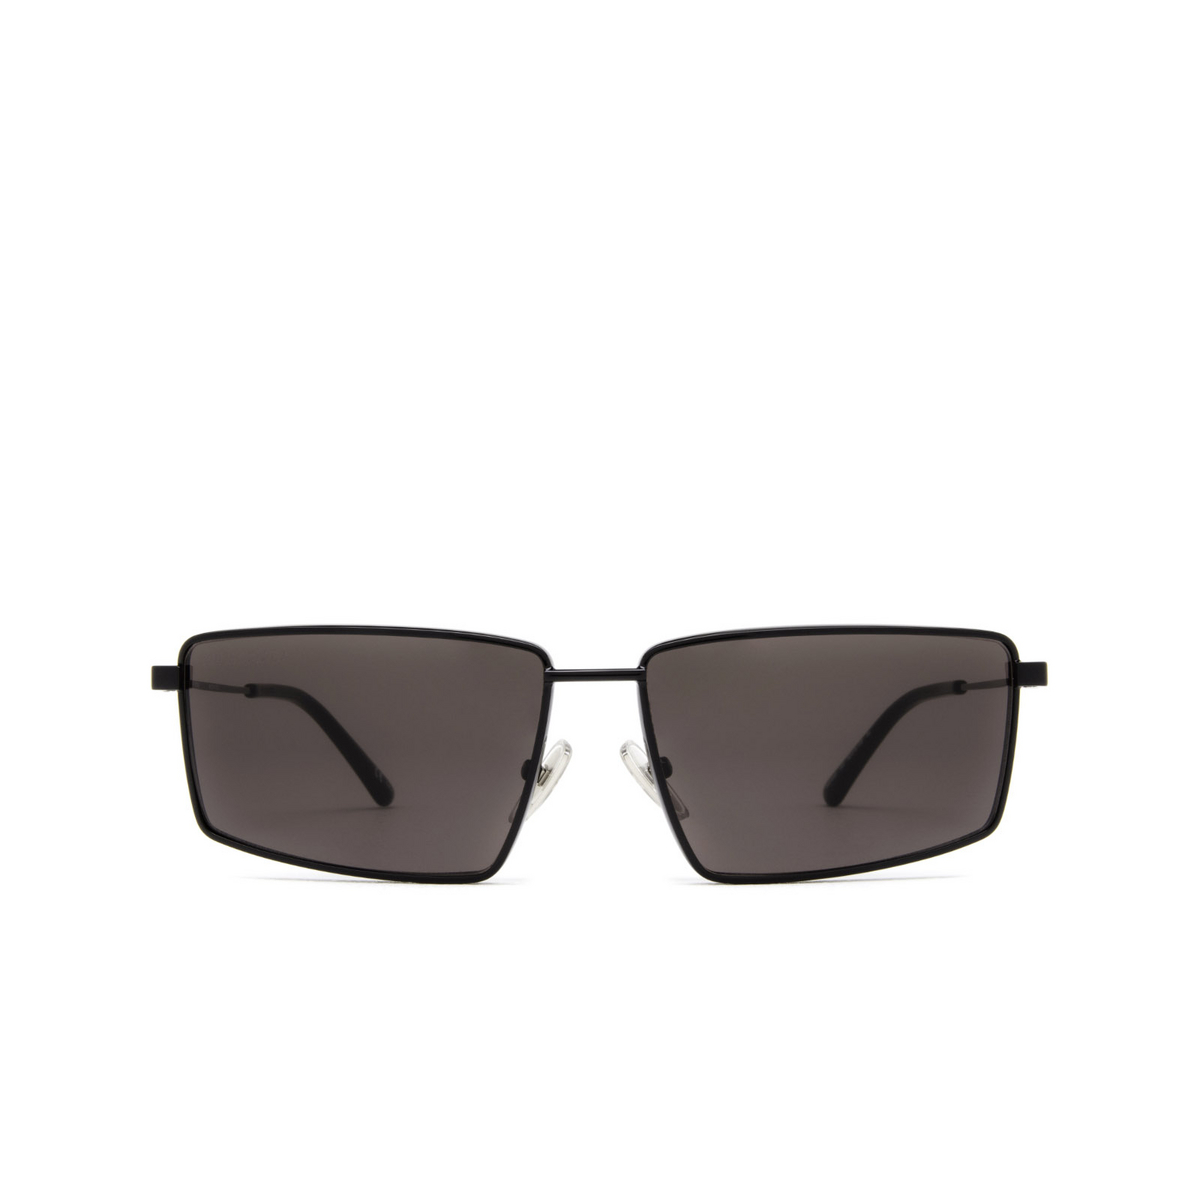 Balenciaga® Rectangle Sunglasses: BB0195S color Black 001 - front view.